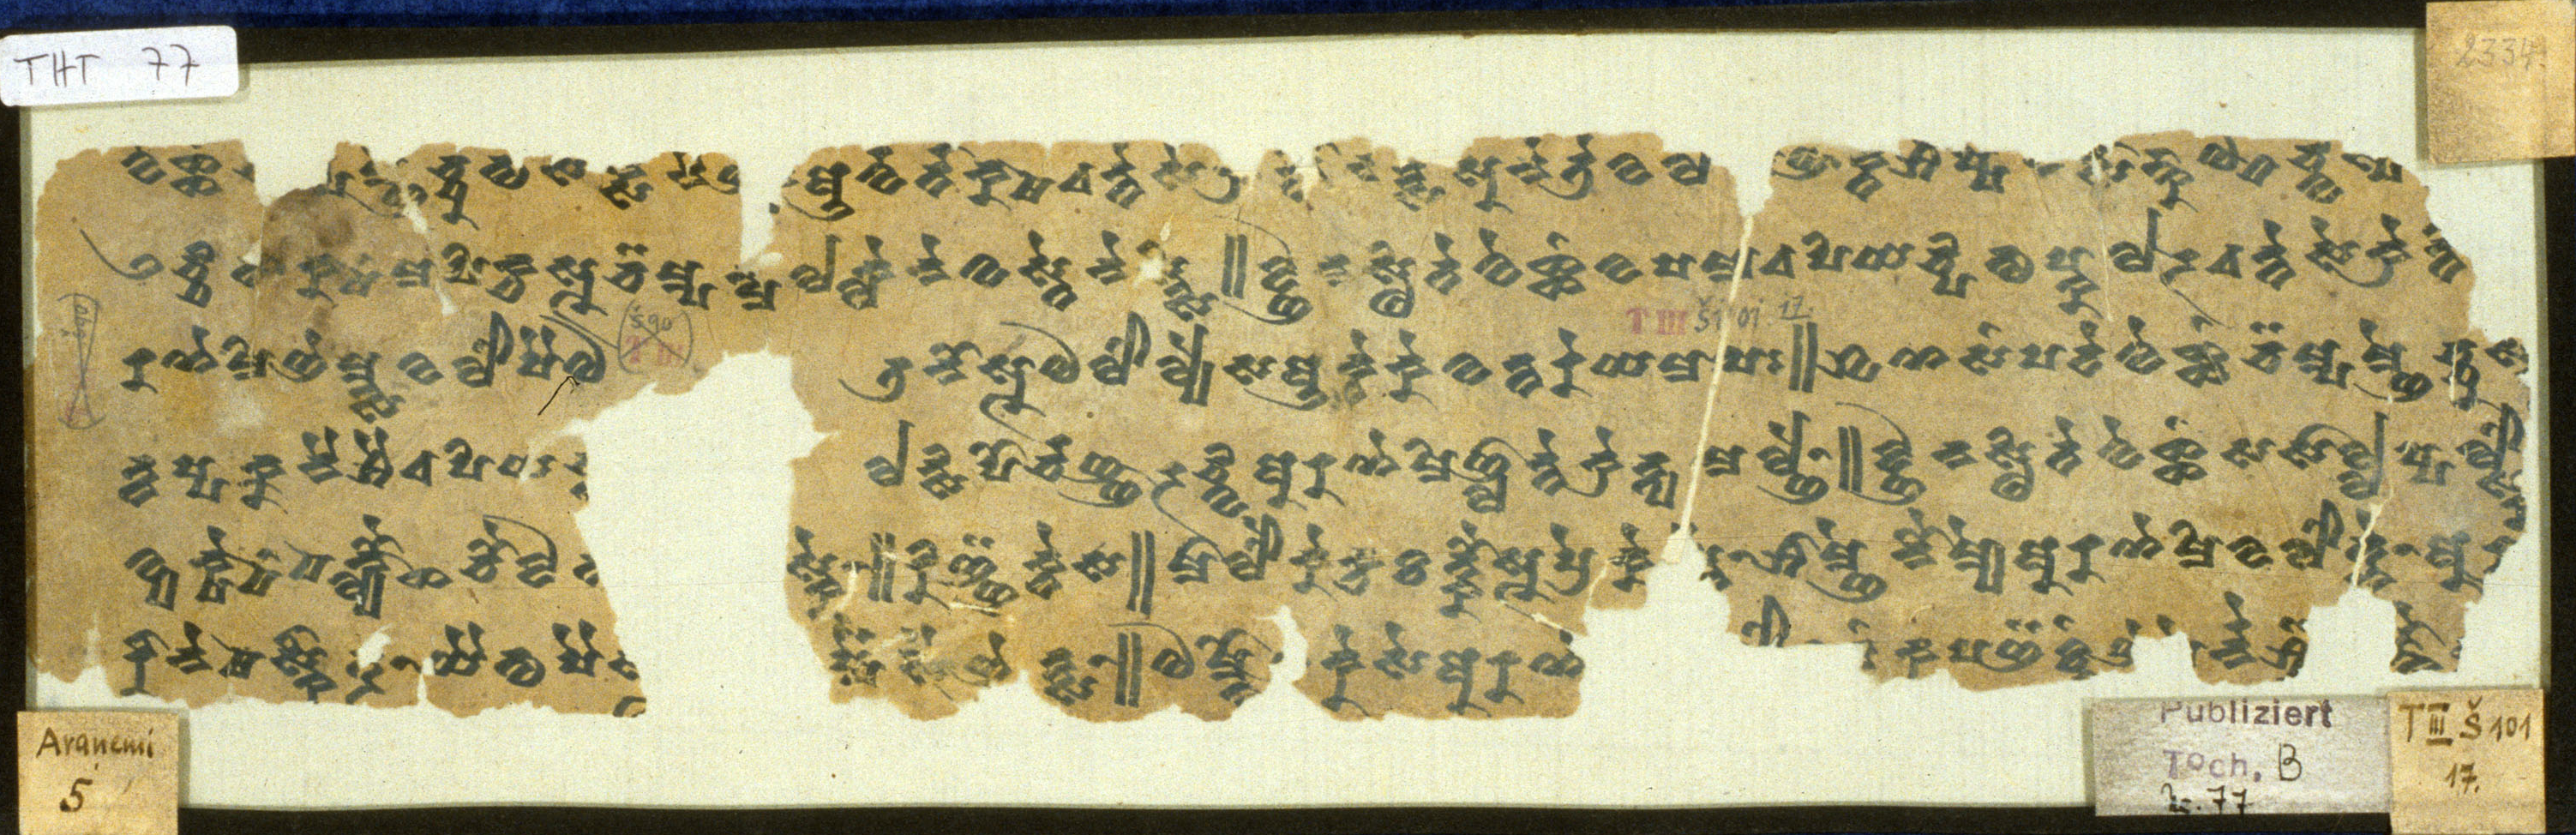 Habata Manuscript